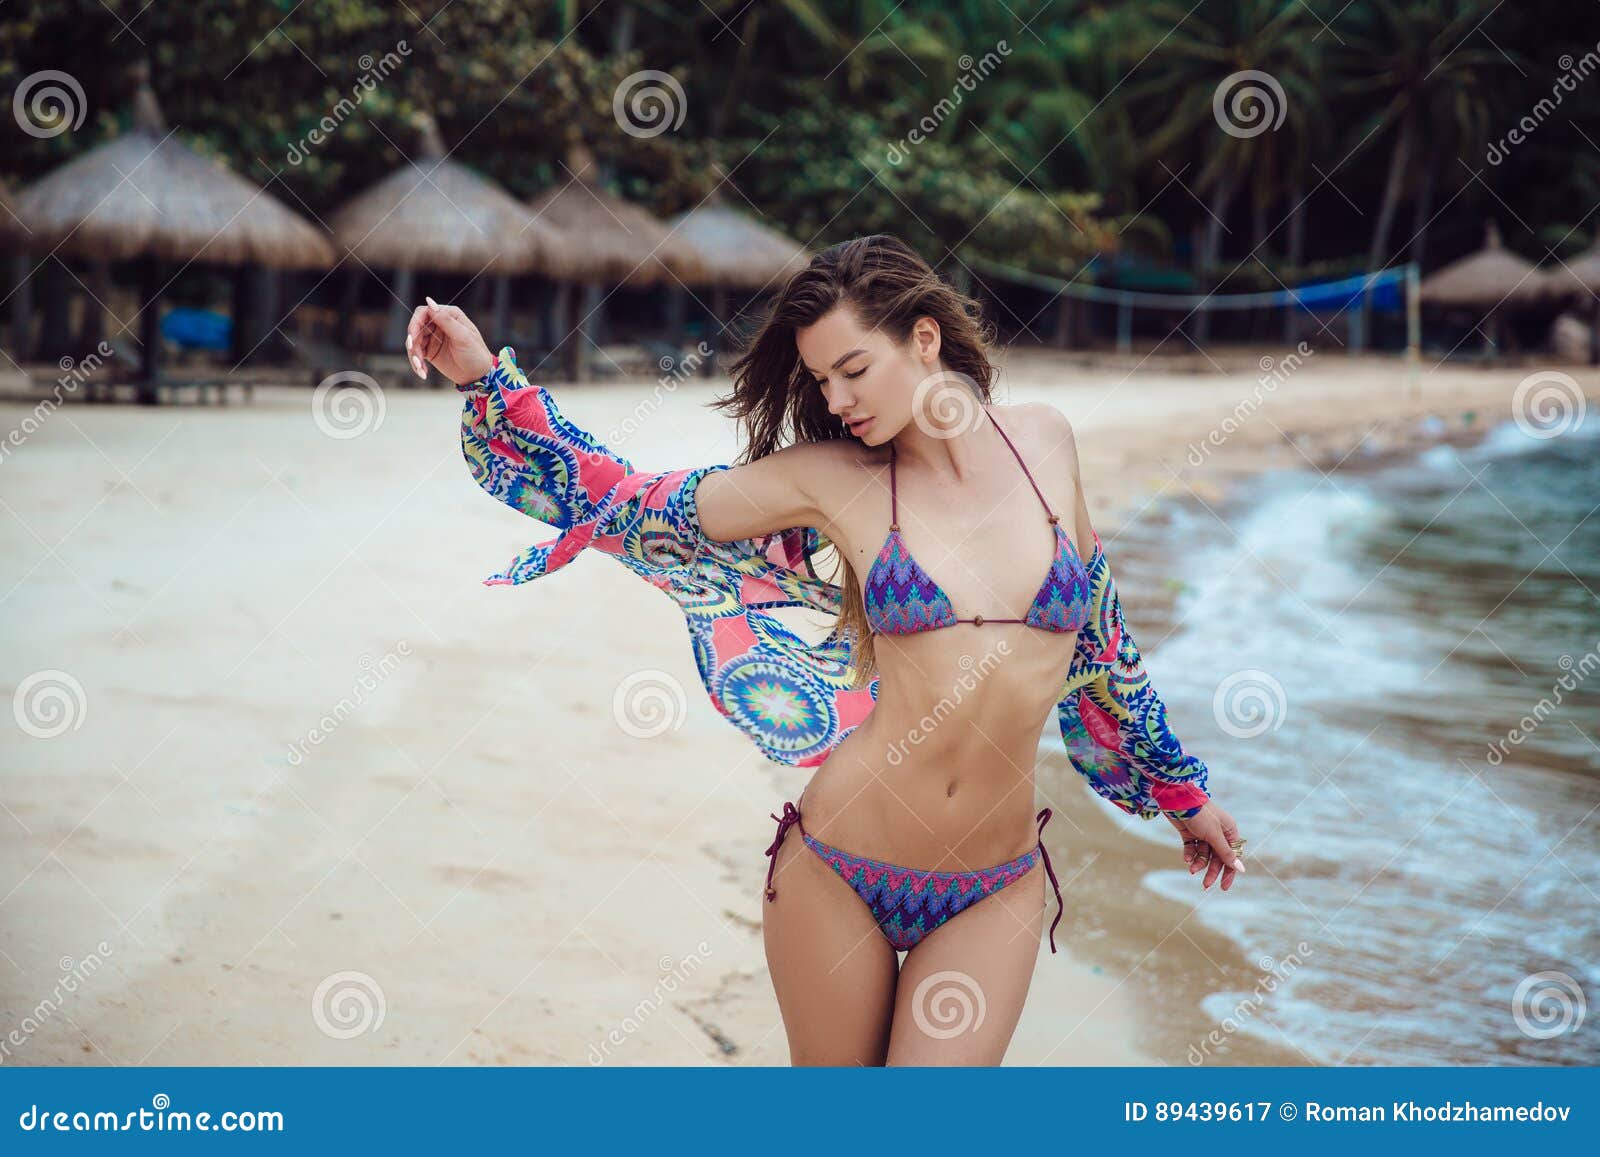 real beach voyeur amazing brunette teen